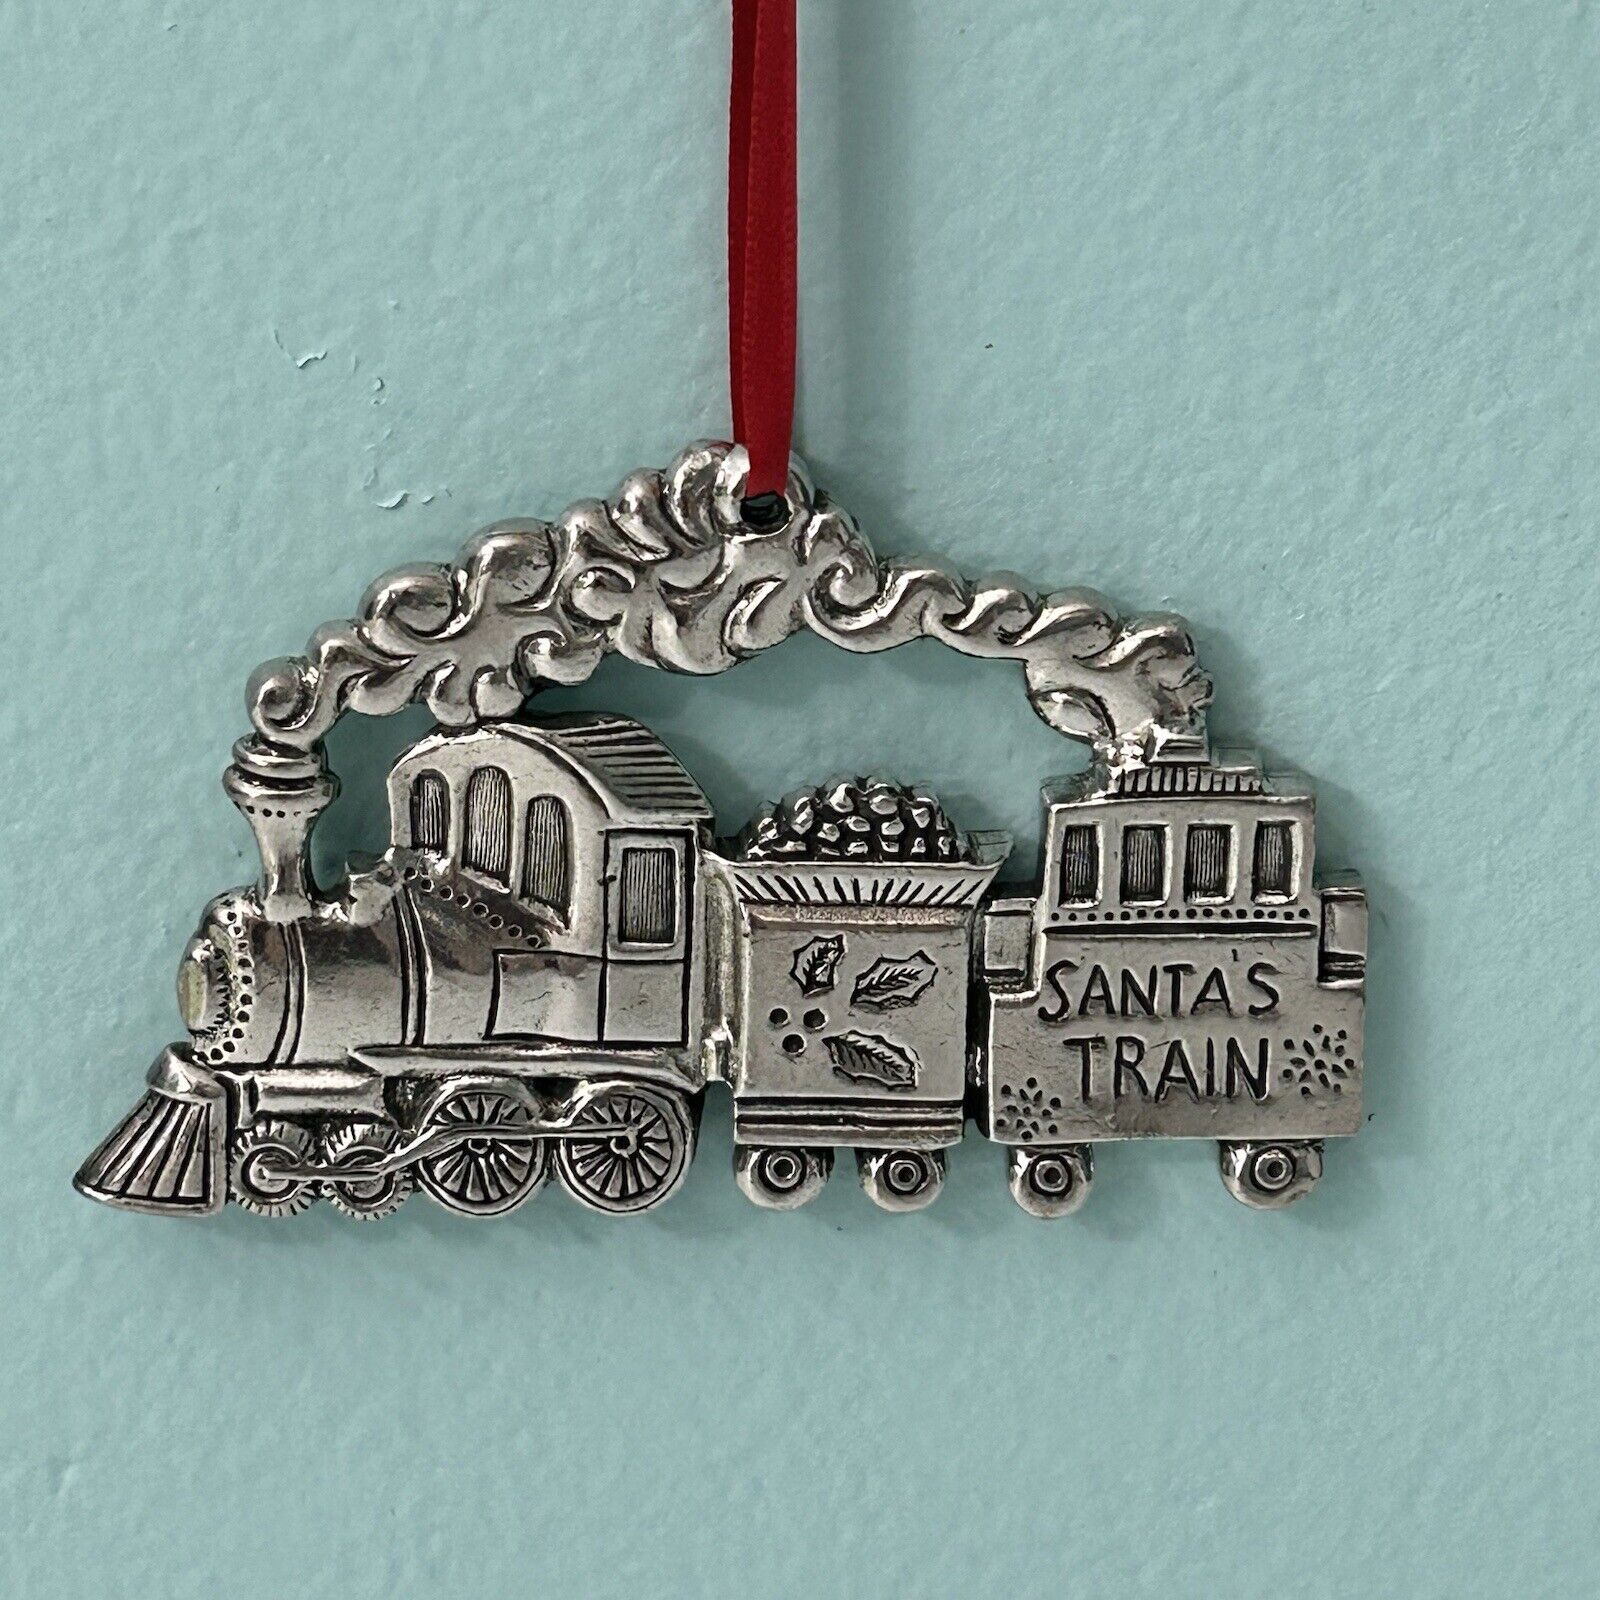 GORHAM  Silverplated Santa’s Train Christmas Ornament Vintage Holiday Decor